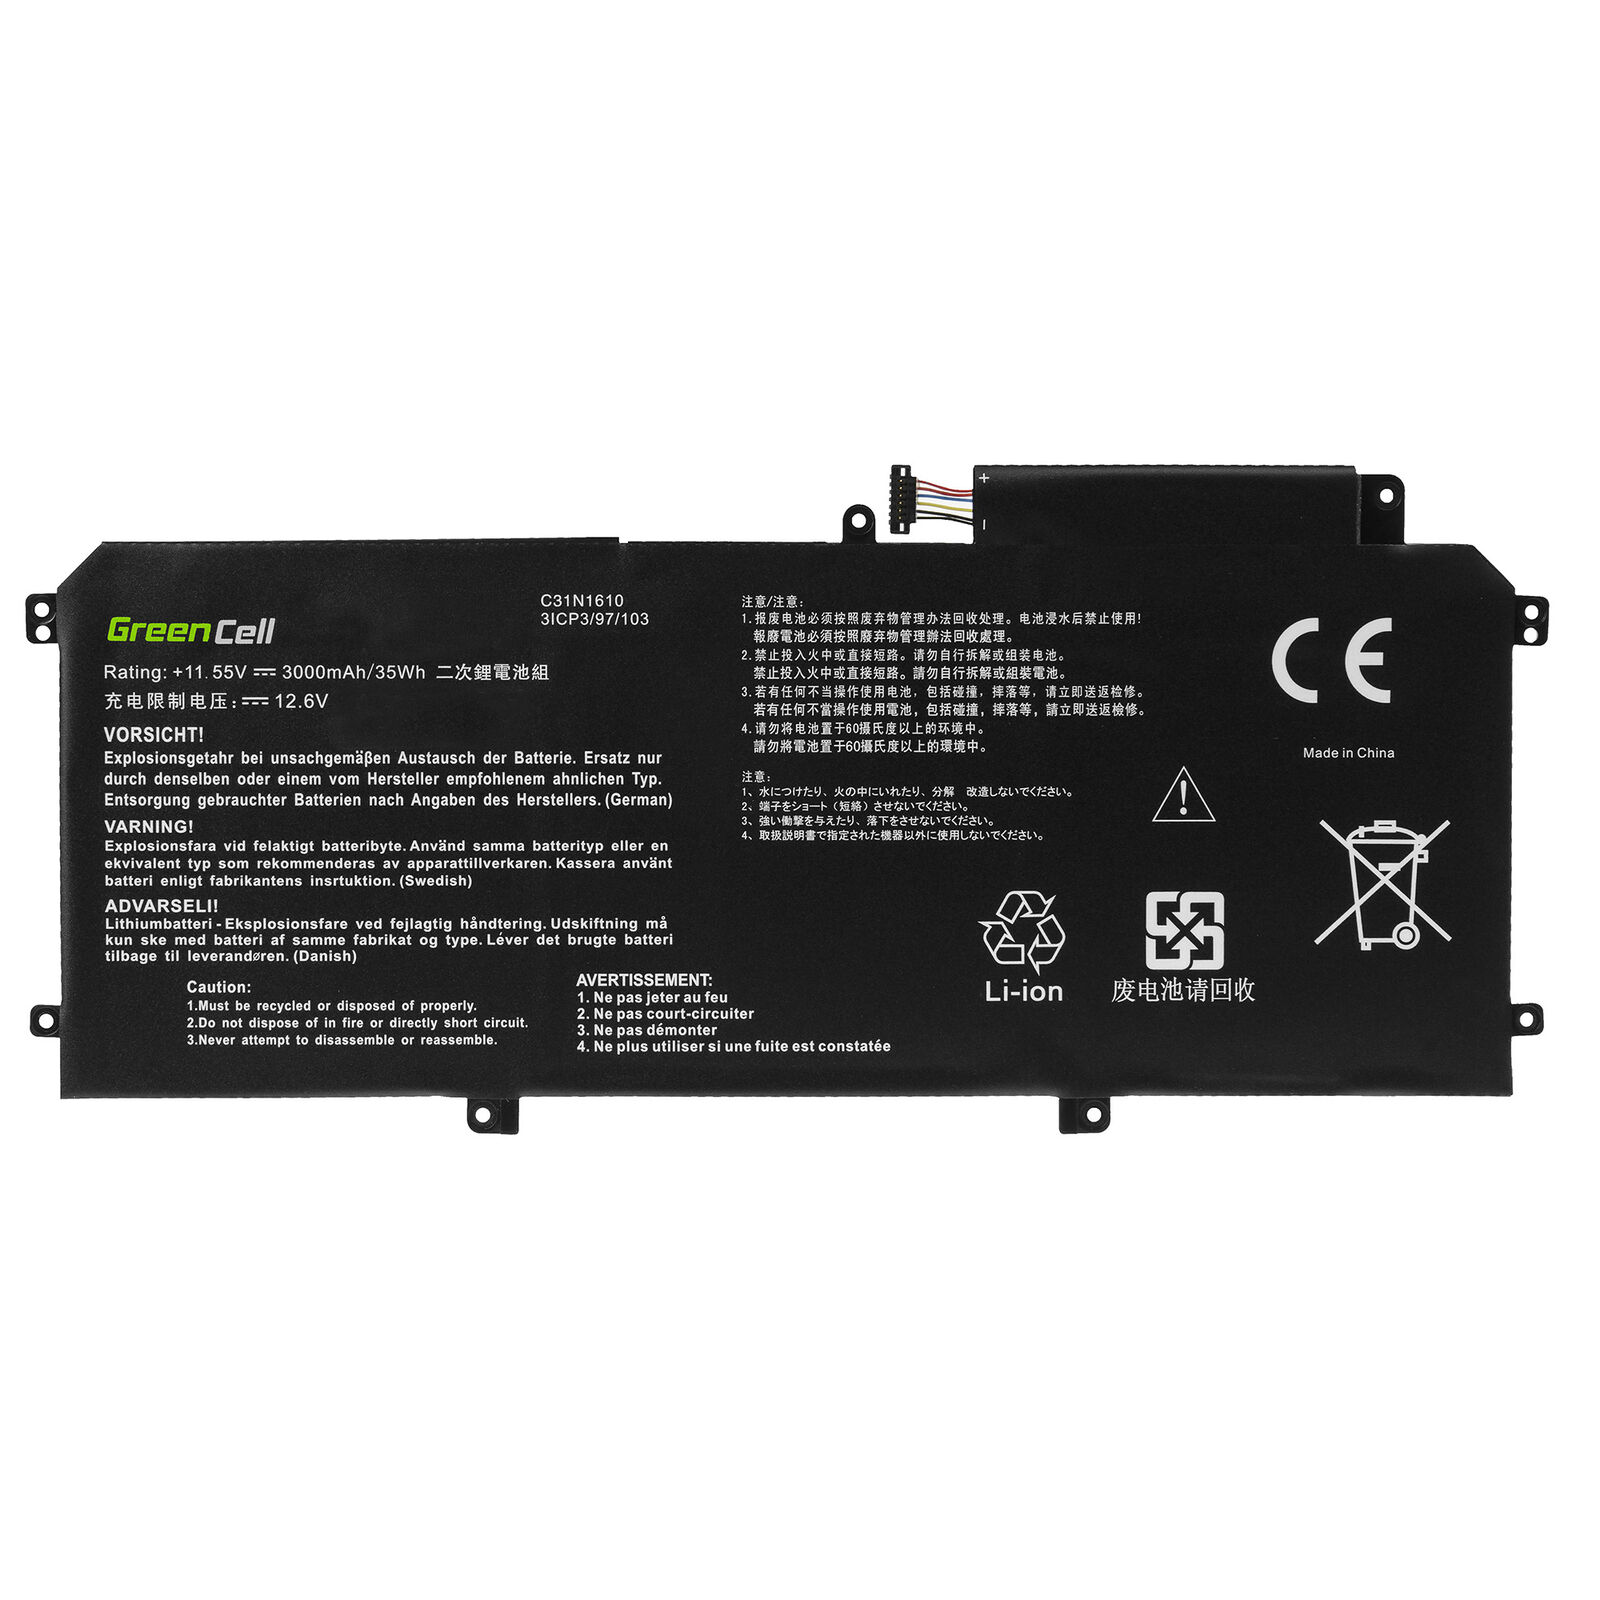 Bateria para C31N1610 ASUS Zenbook UX330CA-1A UX330CA-1C 0B200-02090100